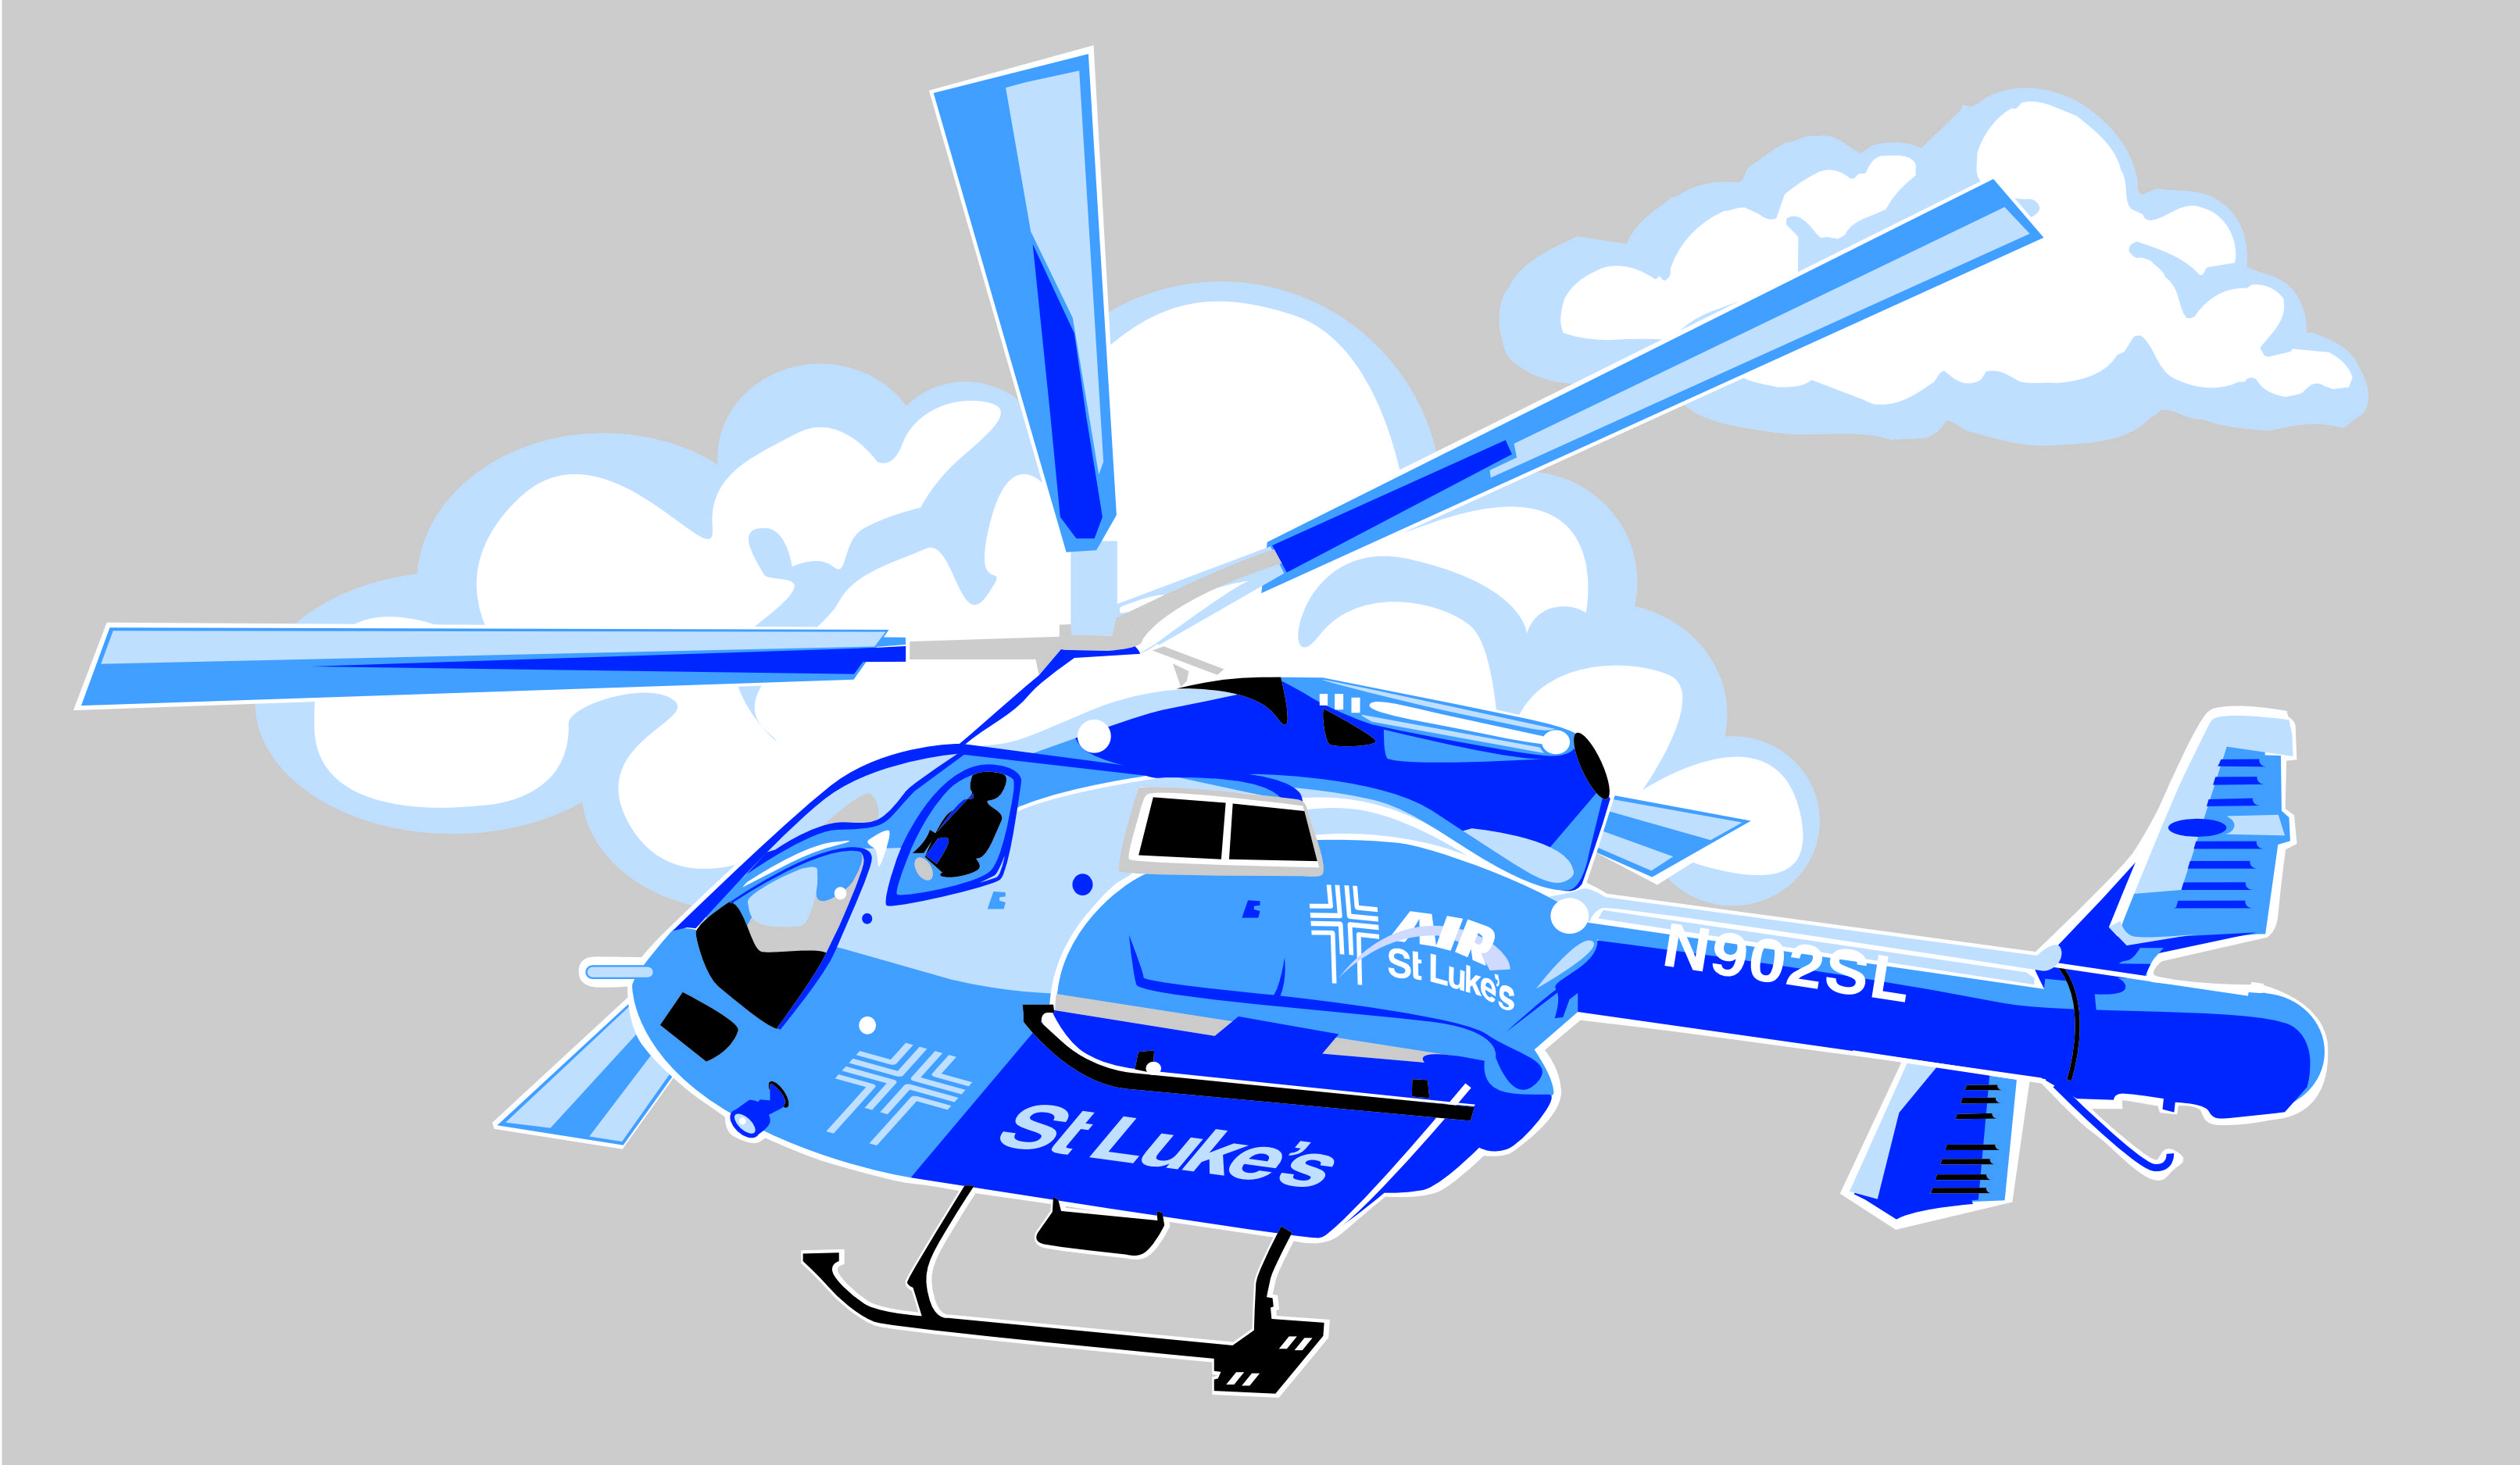 Air St. Luke's illustration by Sarah Tregay.